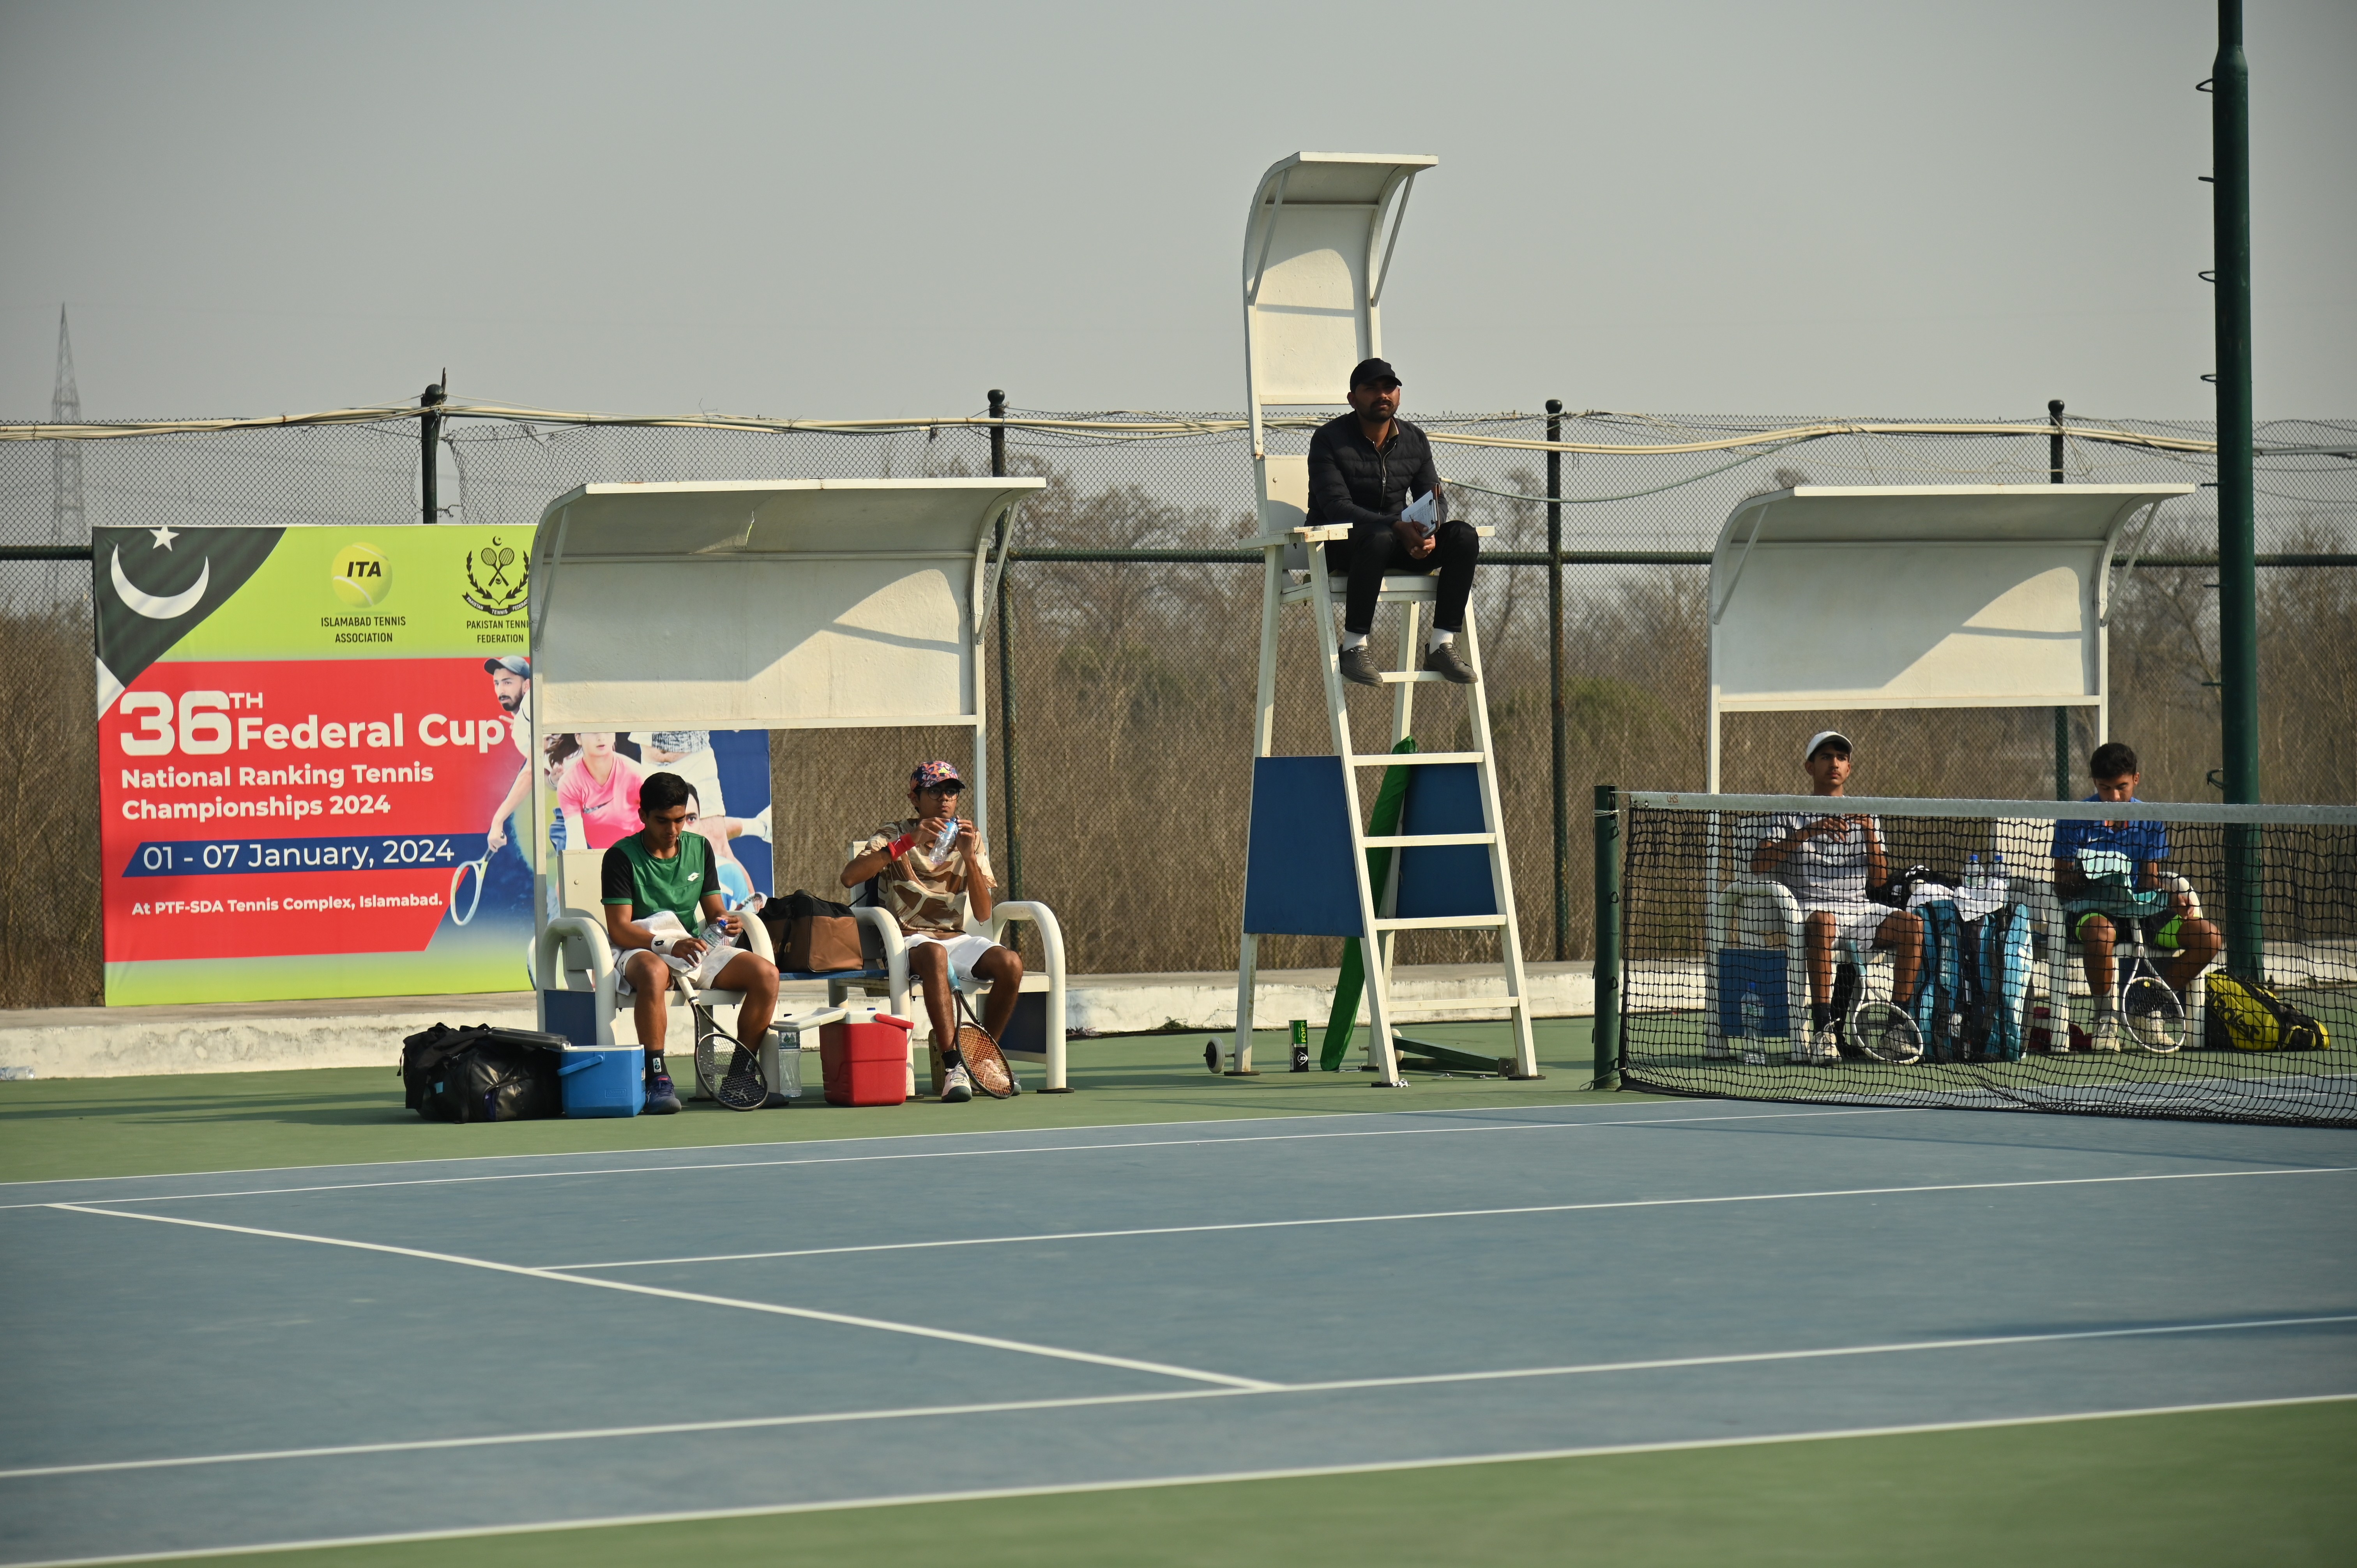 A Tennis Championship held at tennis complex